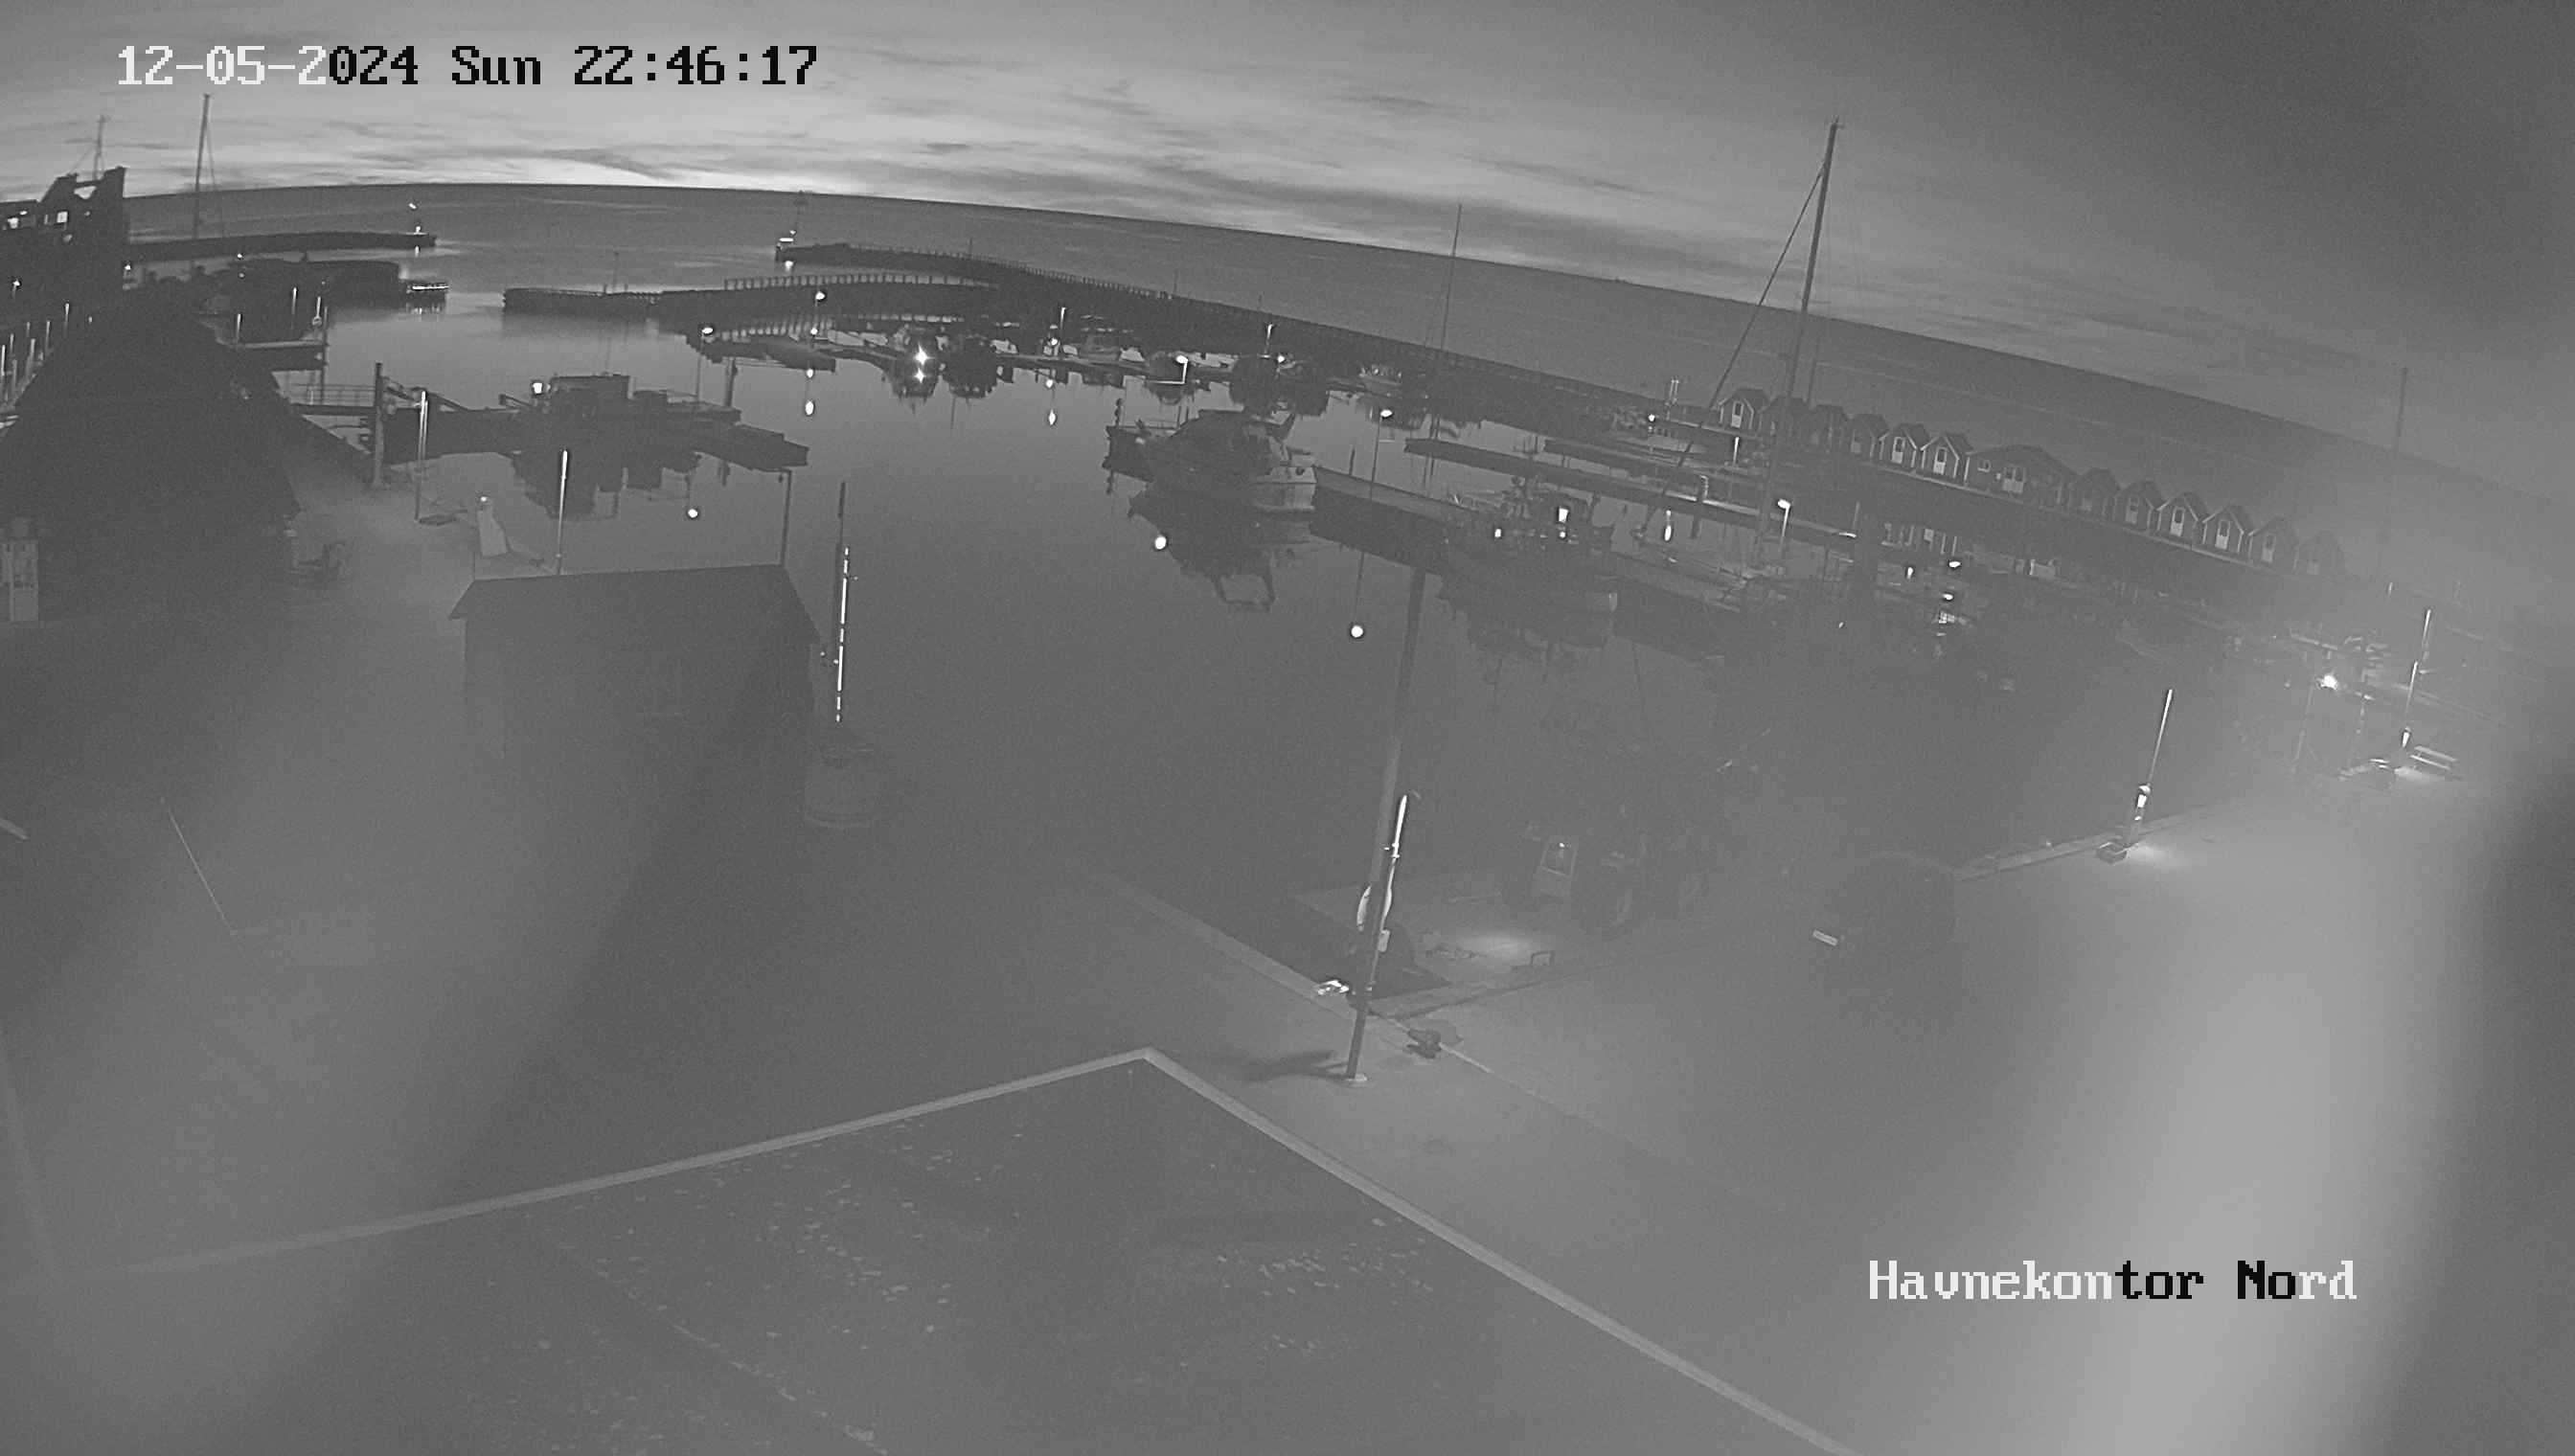 Vesterø Havn (Læsø) Mer. 22:47